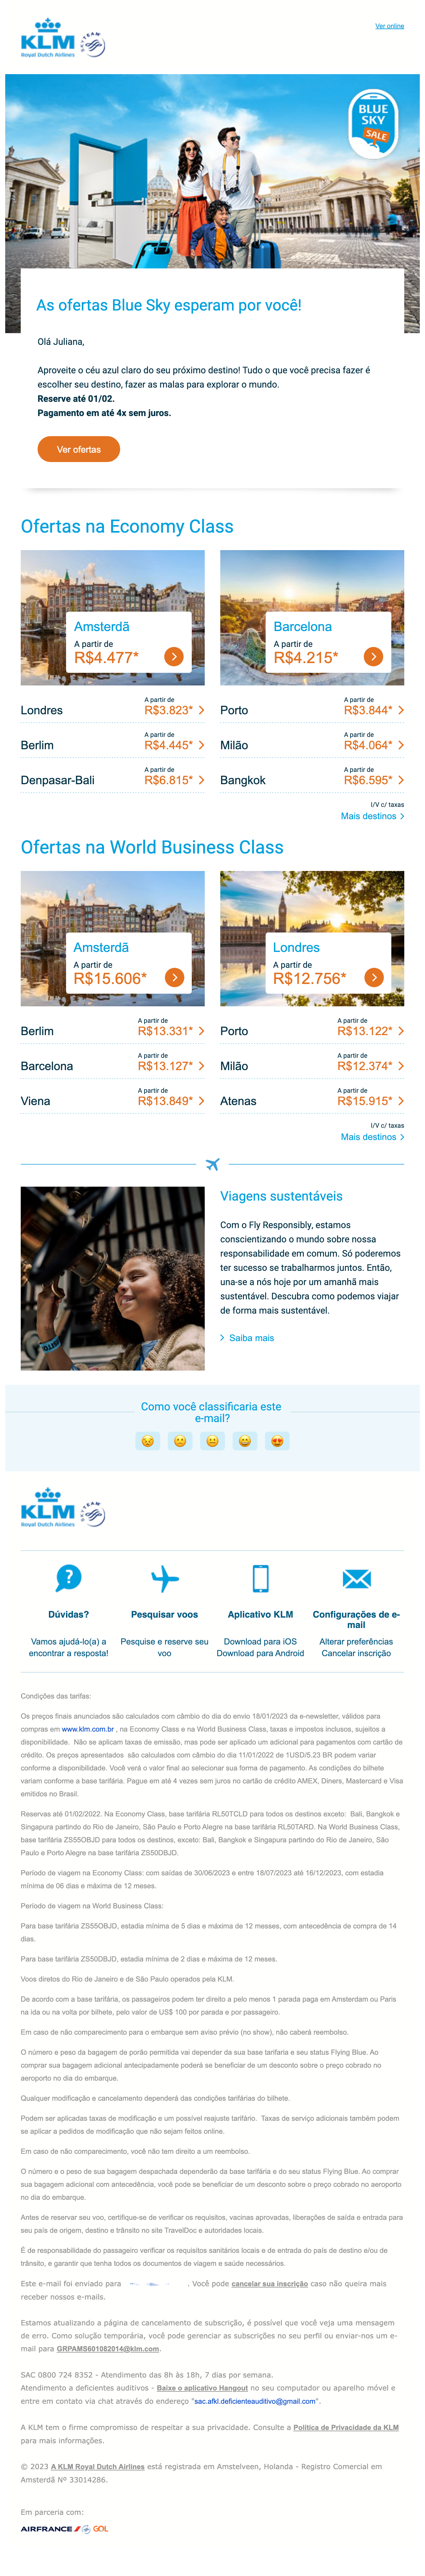 Email marketing Ofertas KLM